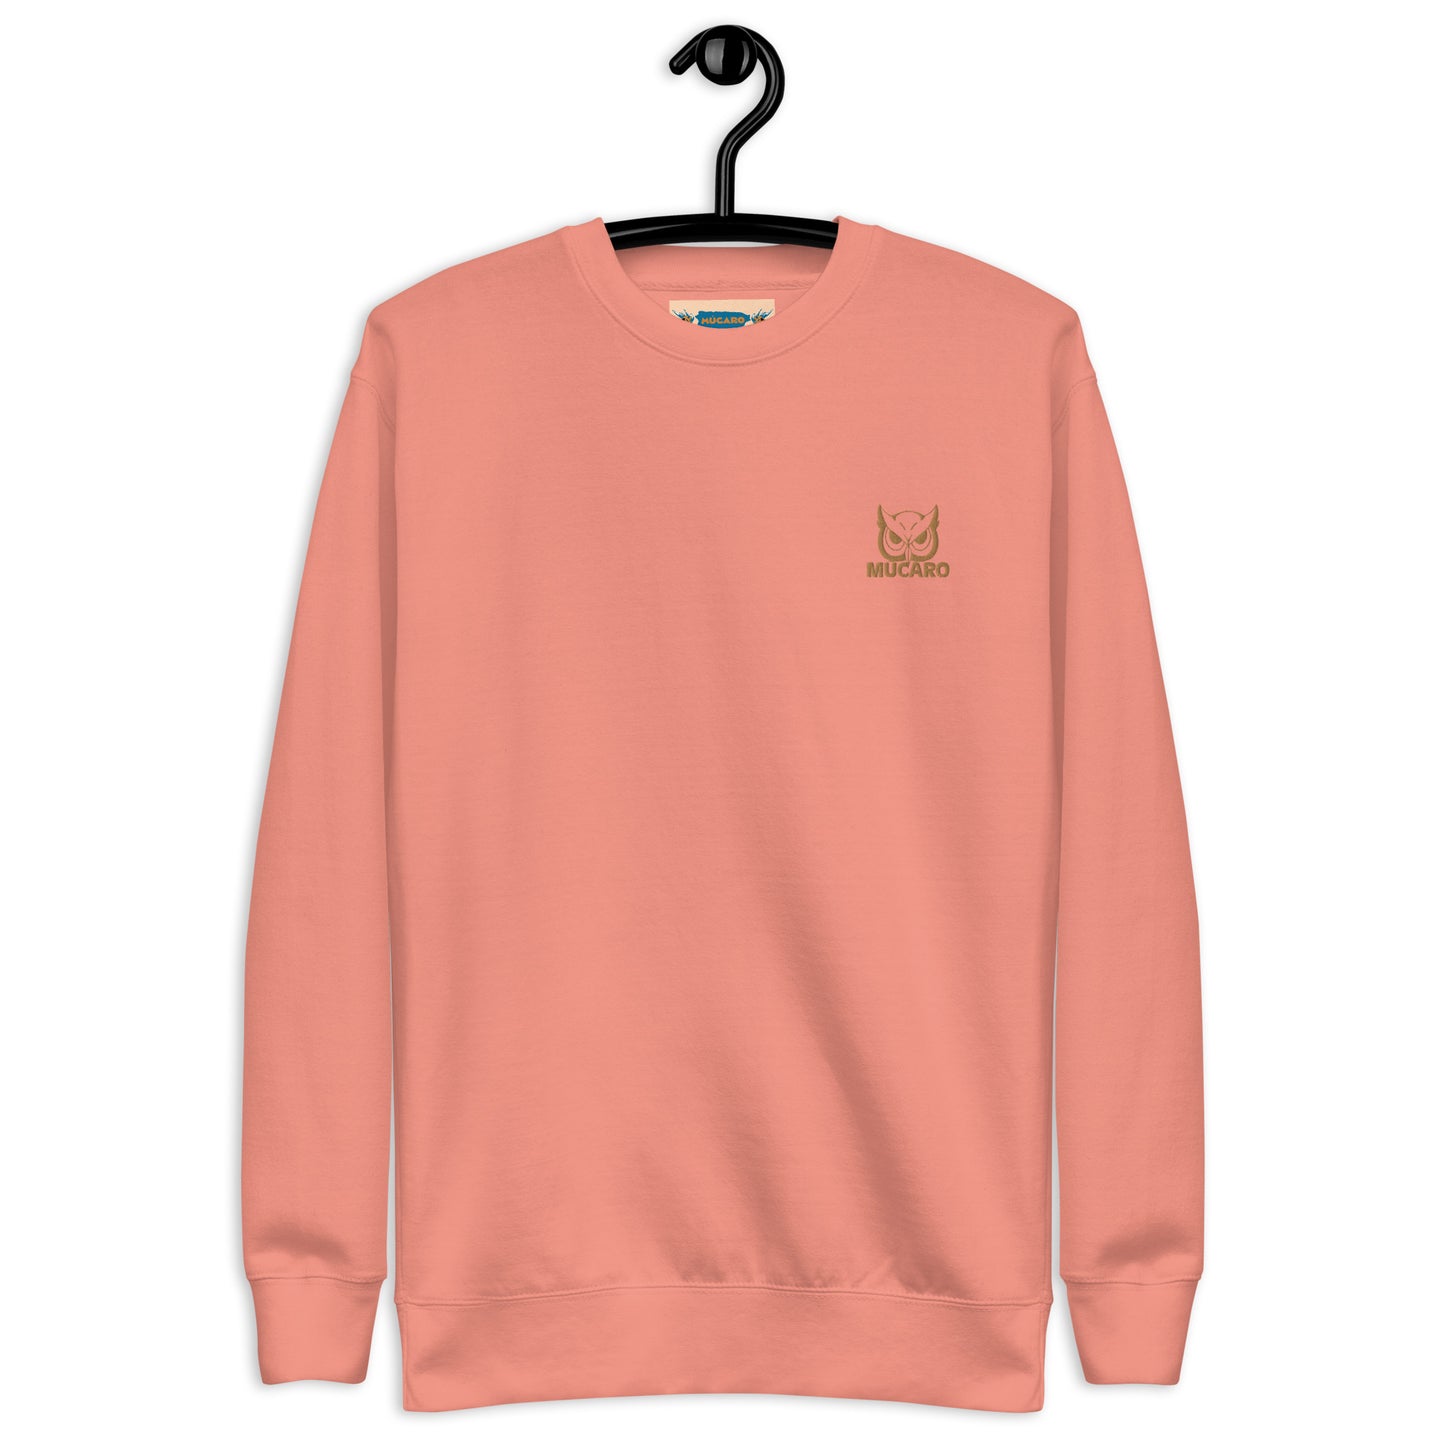 Múcaro’s Really Sexy Sweatshirt